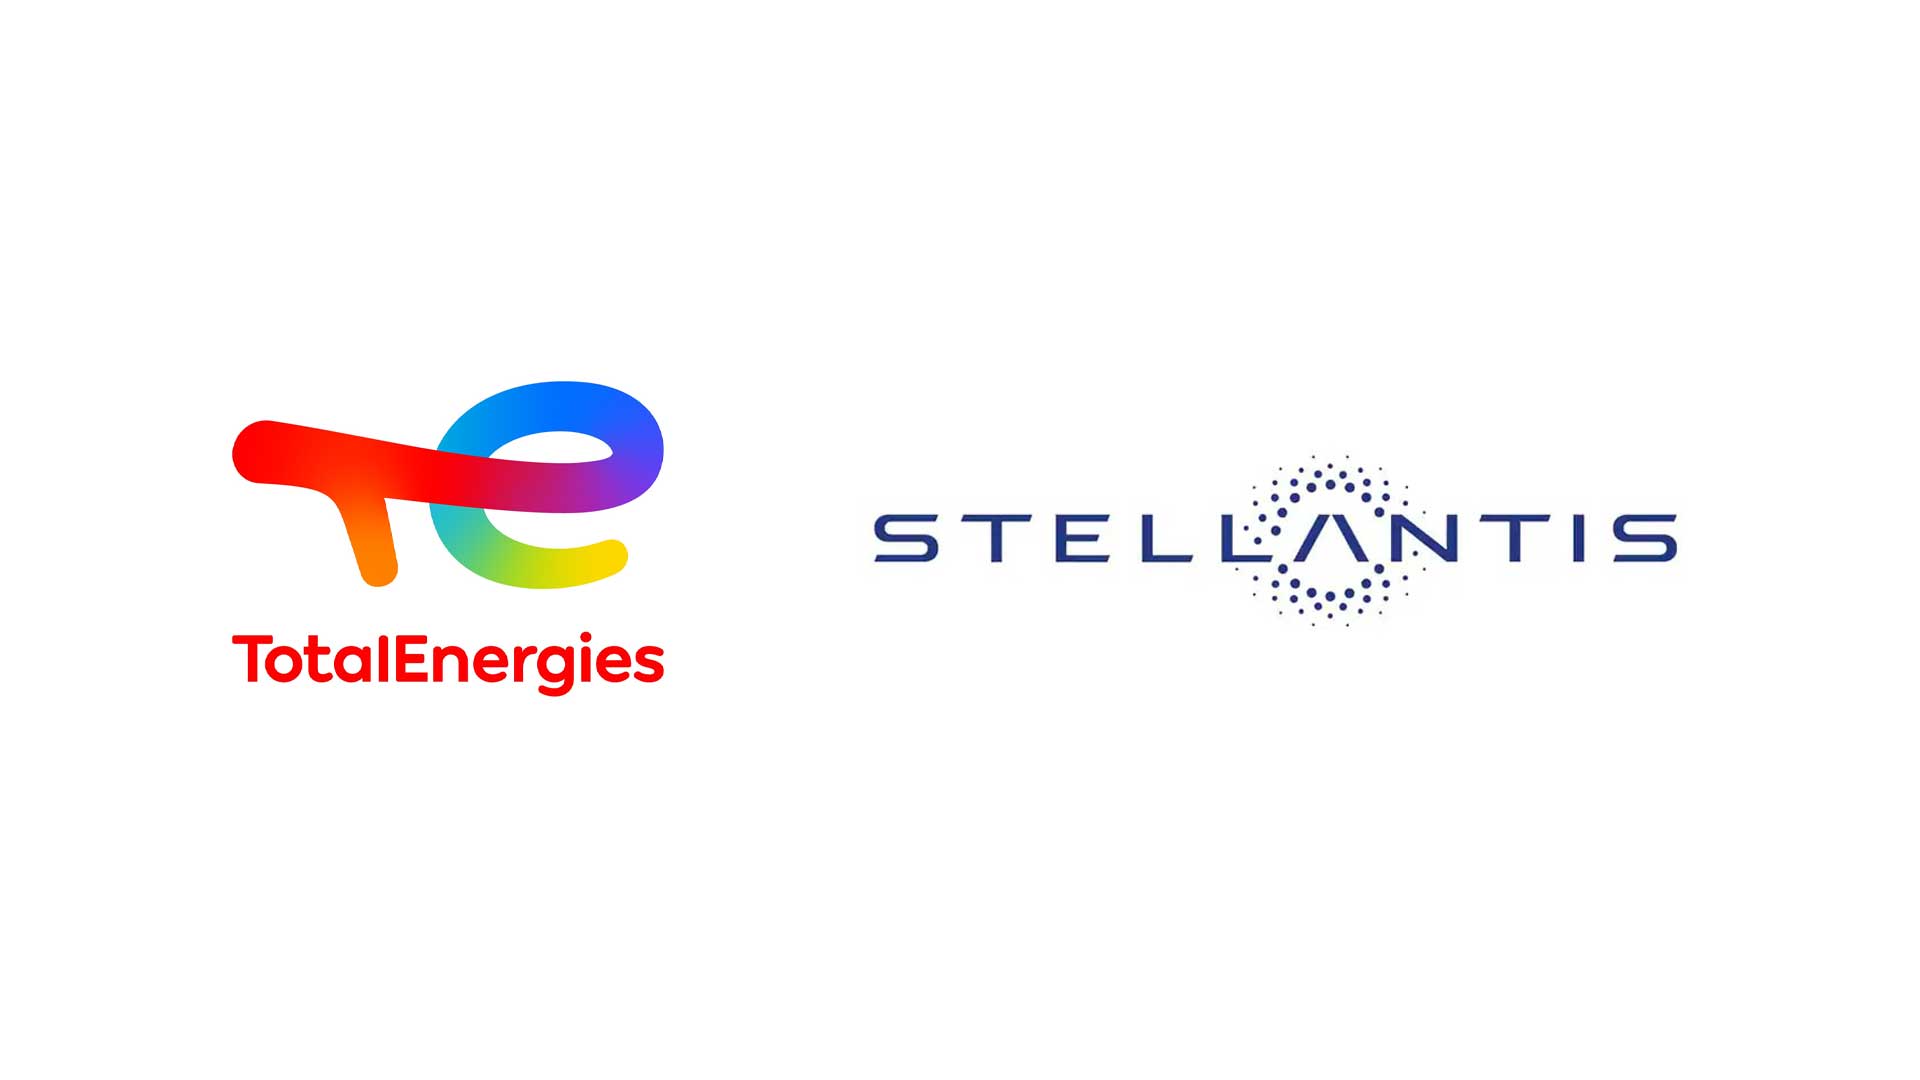 TotalEnergies logo and Stellantis logo